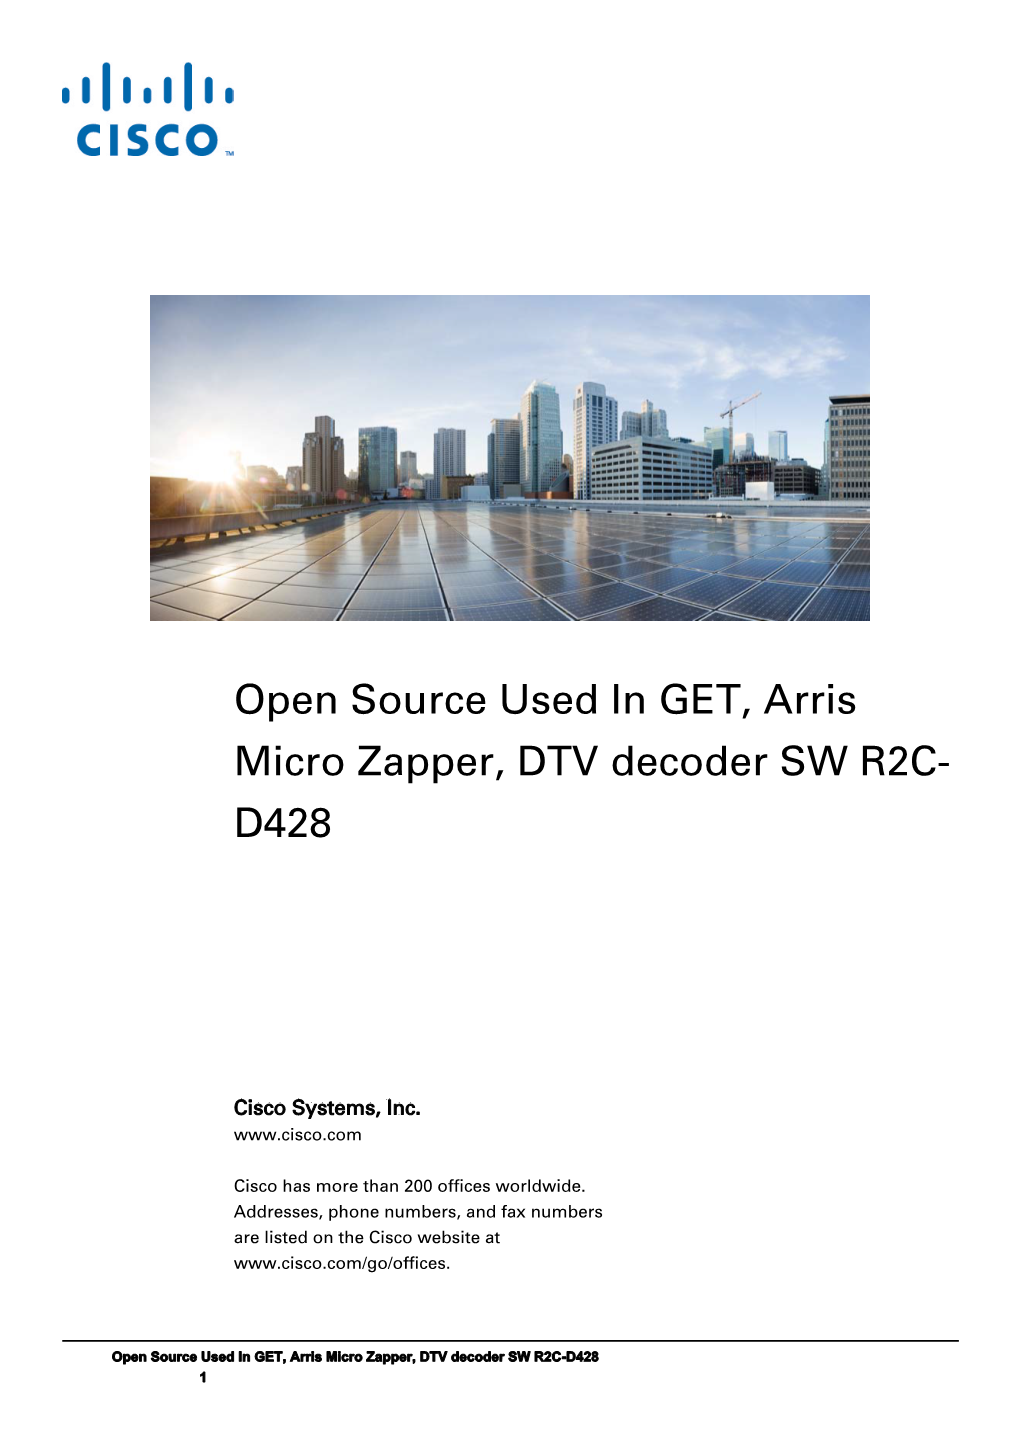 Open Source Used in GET, Arris Micro Zapper, DTV Decoder SW R2C- D428